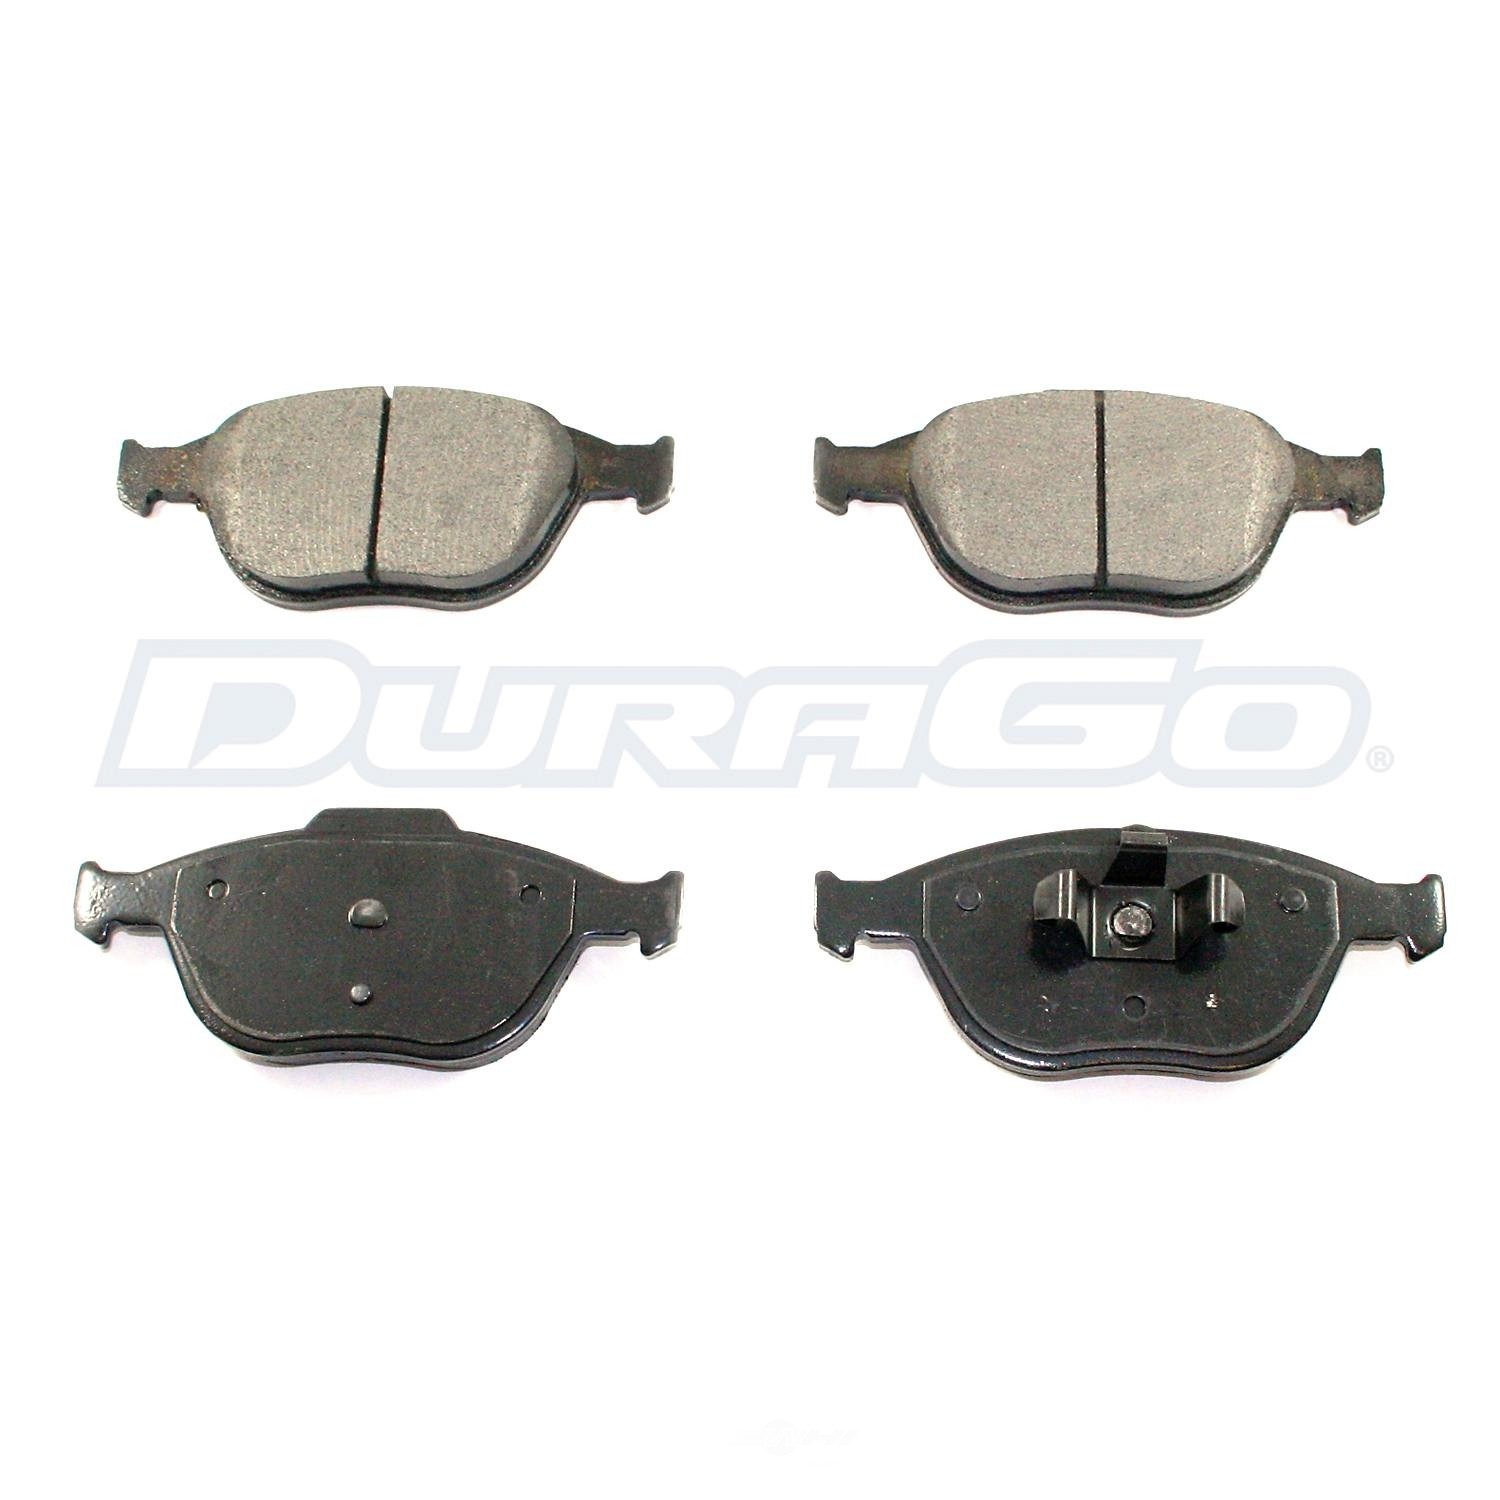 DURAGO - Disc Brake Pad (Front) - D48 BP970MS